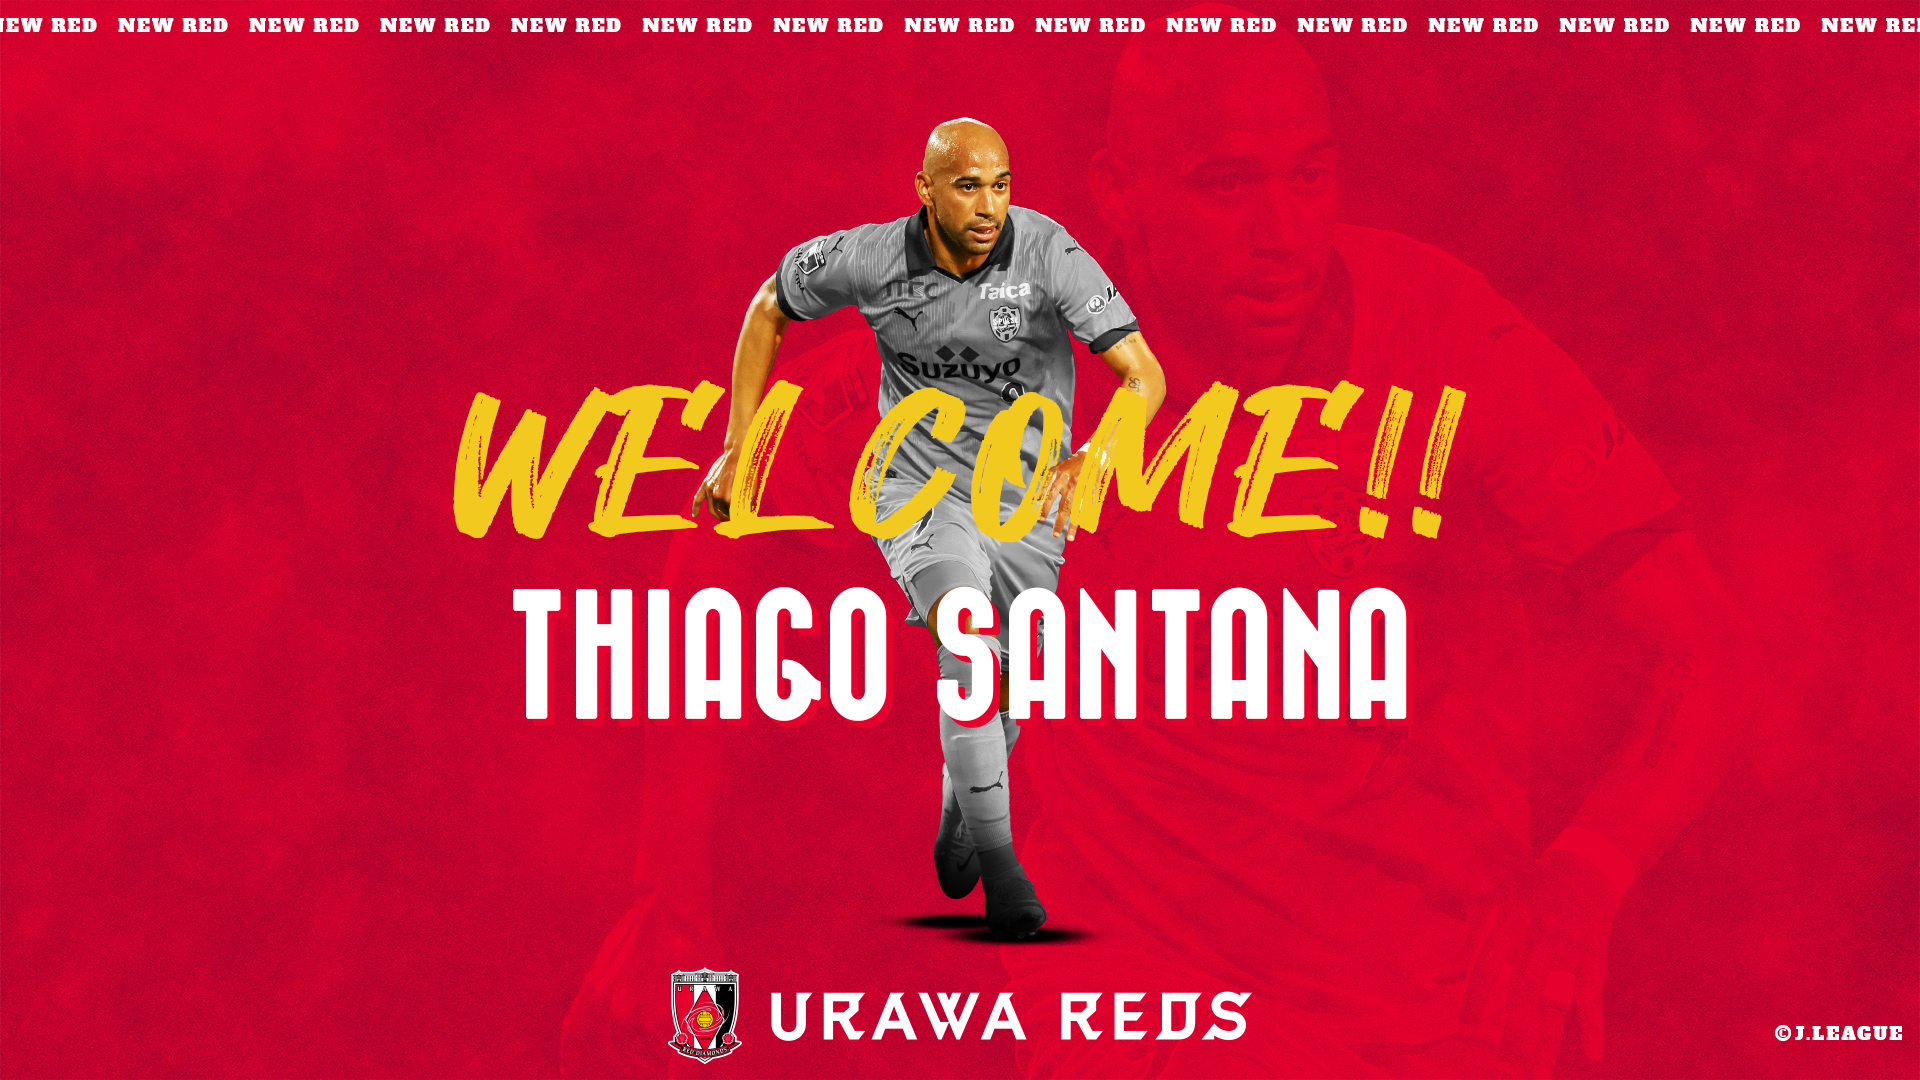 Announcement of permanent transfer of Thiago Santana